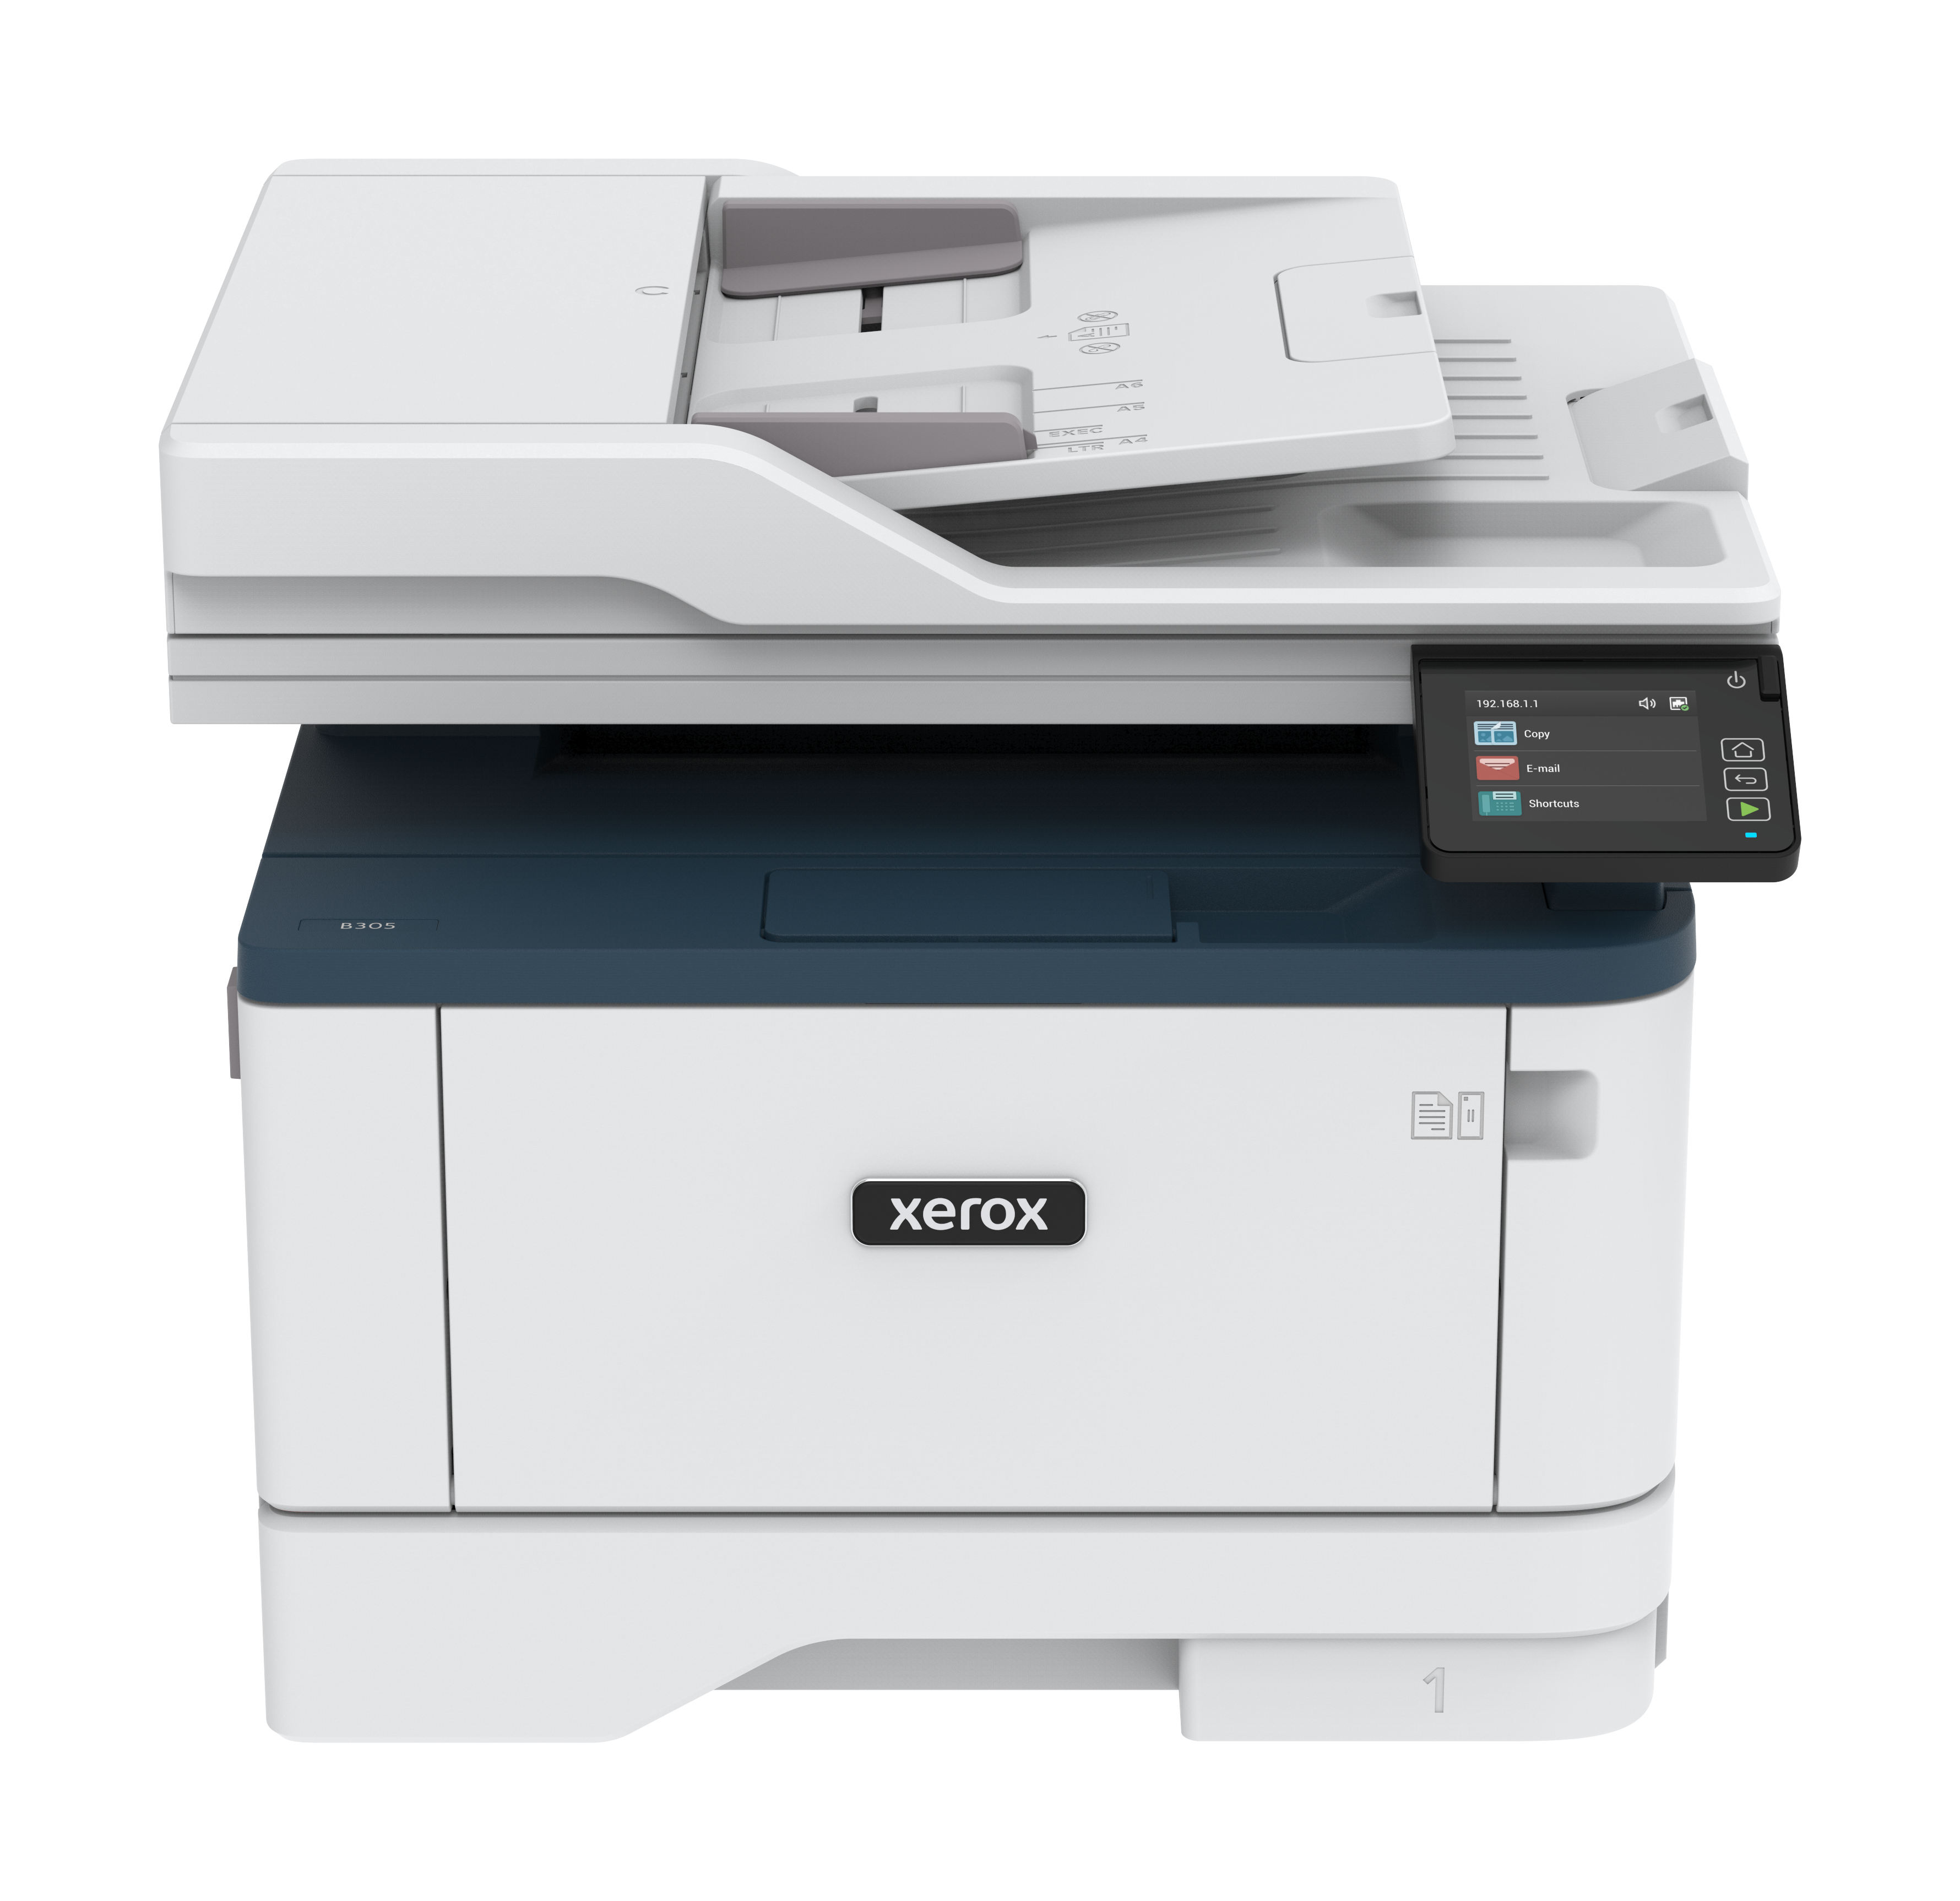 Xerox B305 A4 38 ppm trådlös dubbelkopiering/utskrift/scanning PS3 PCL5e/6 2 magasin 350 ark